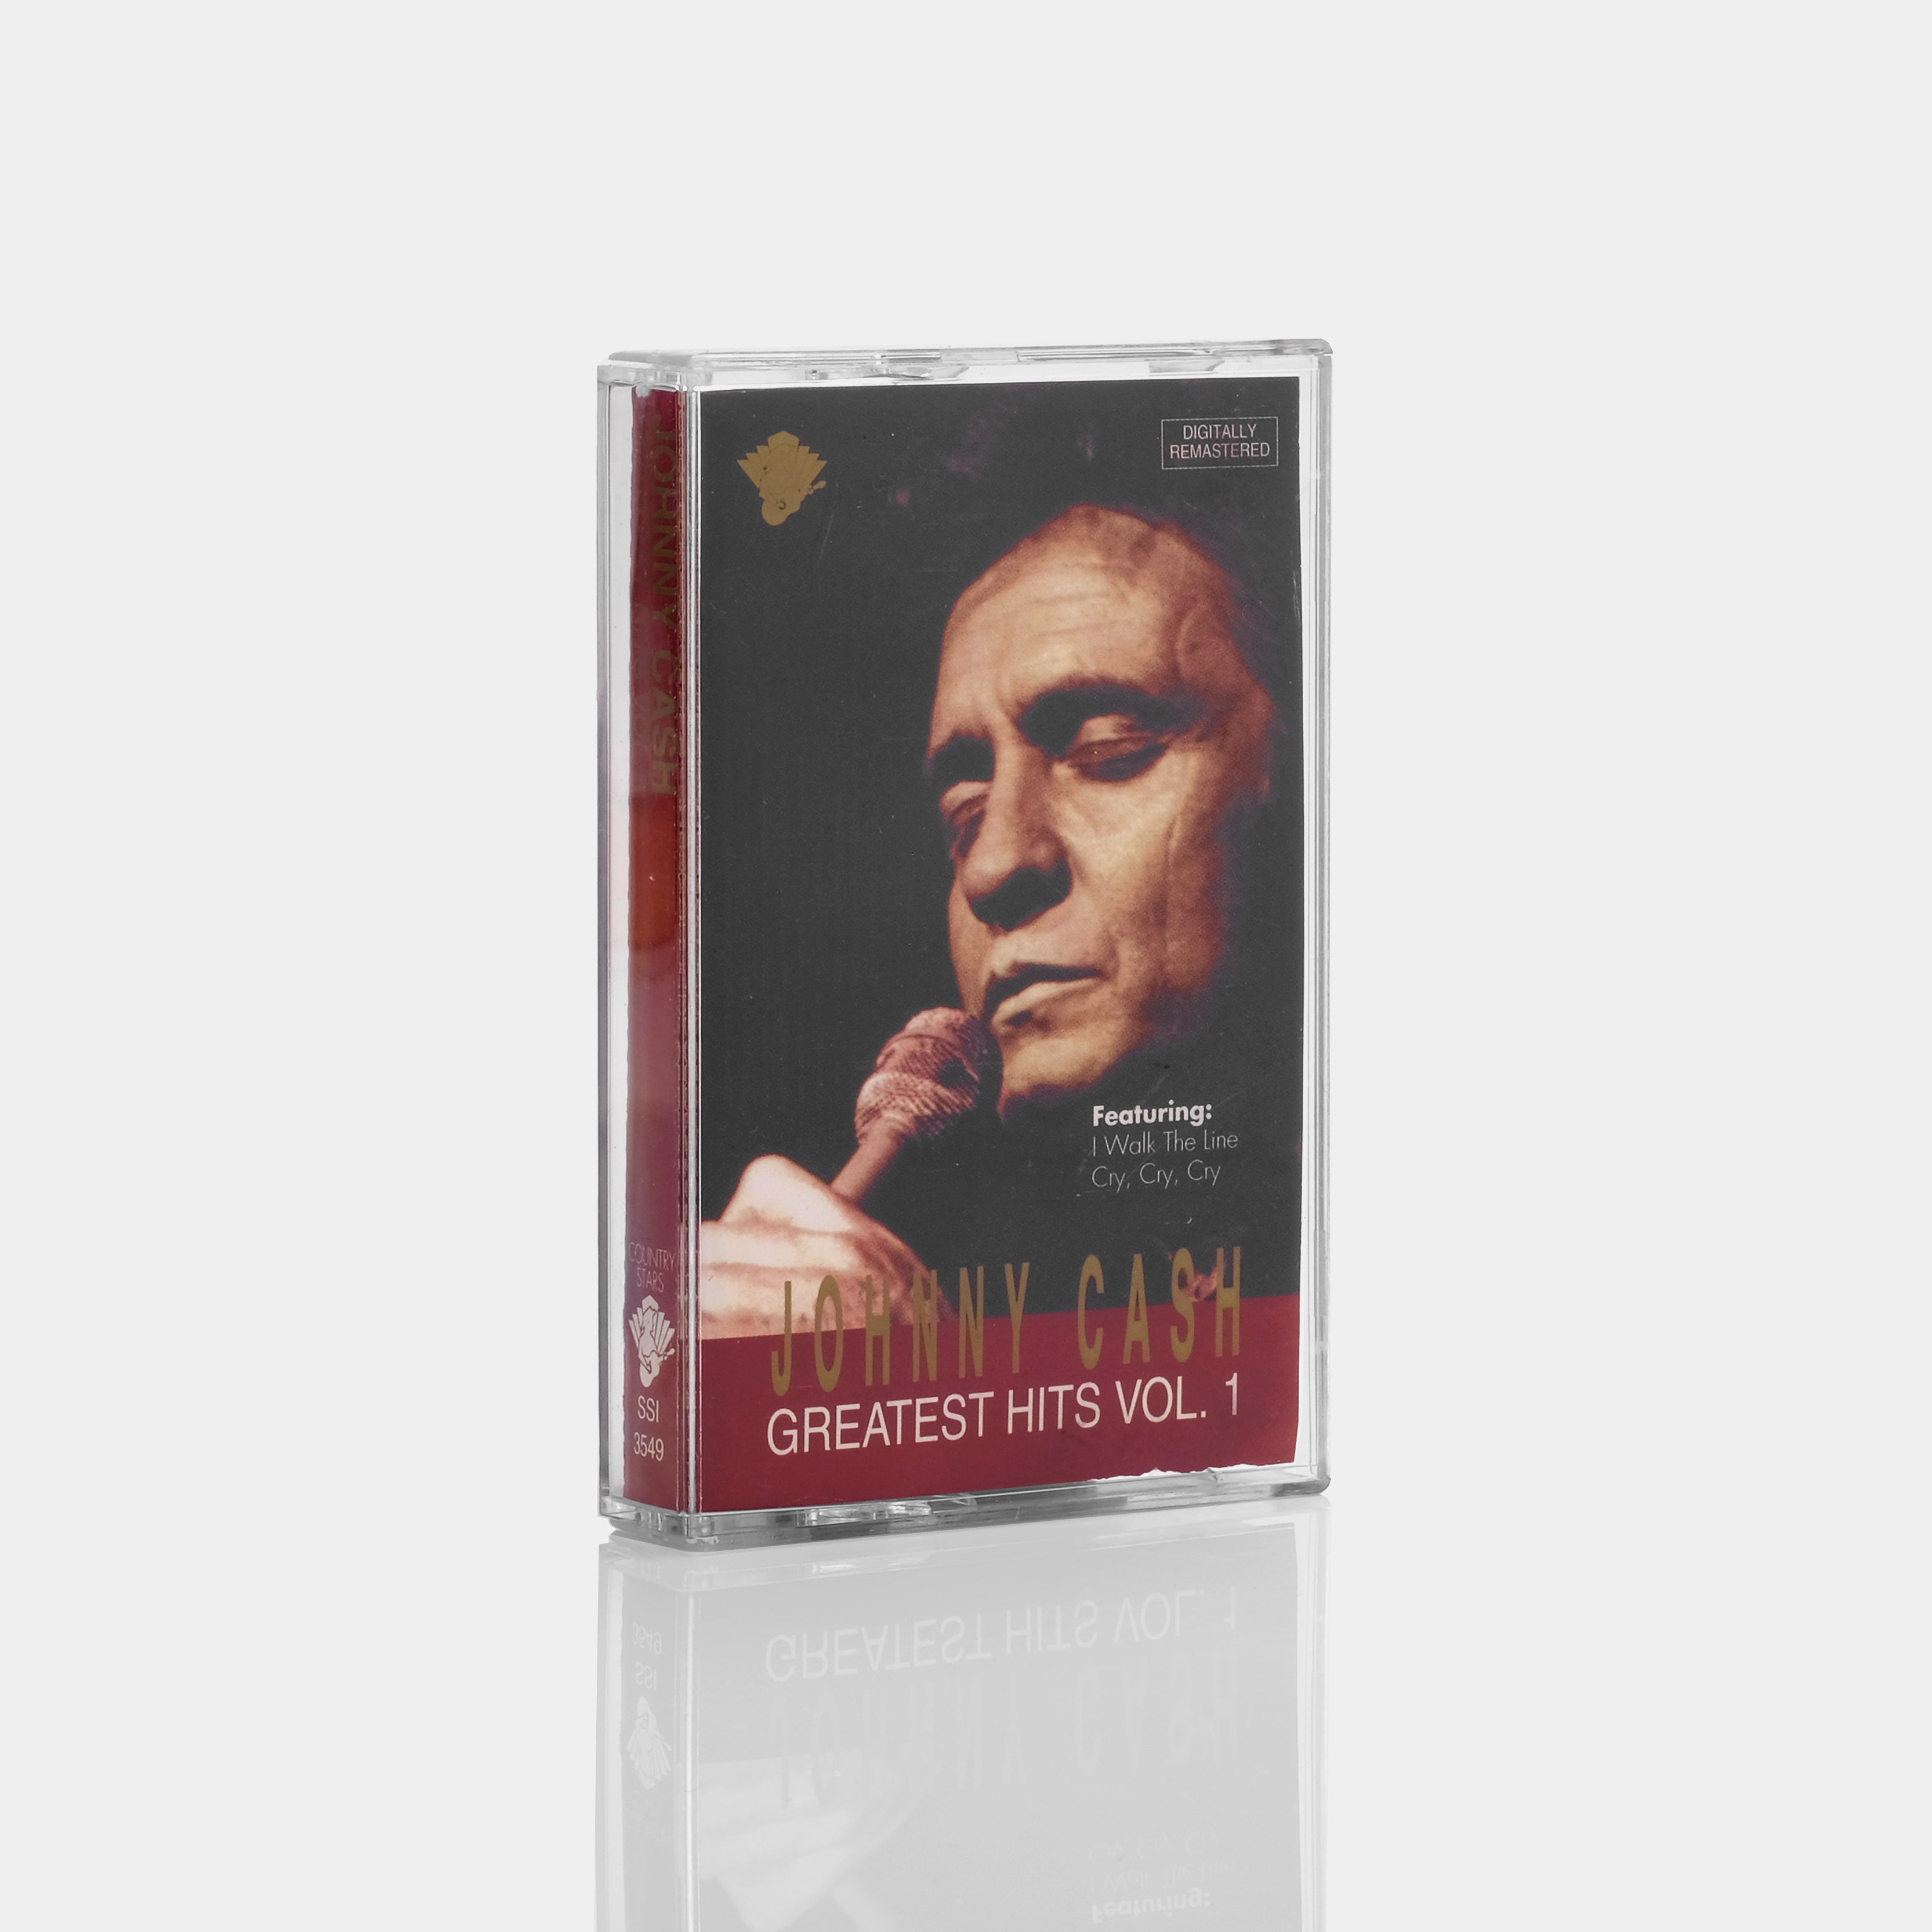 Johnny Cash - Greatest Hits Vol. 1 Cassette Tape